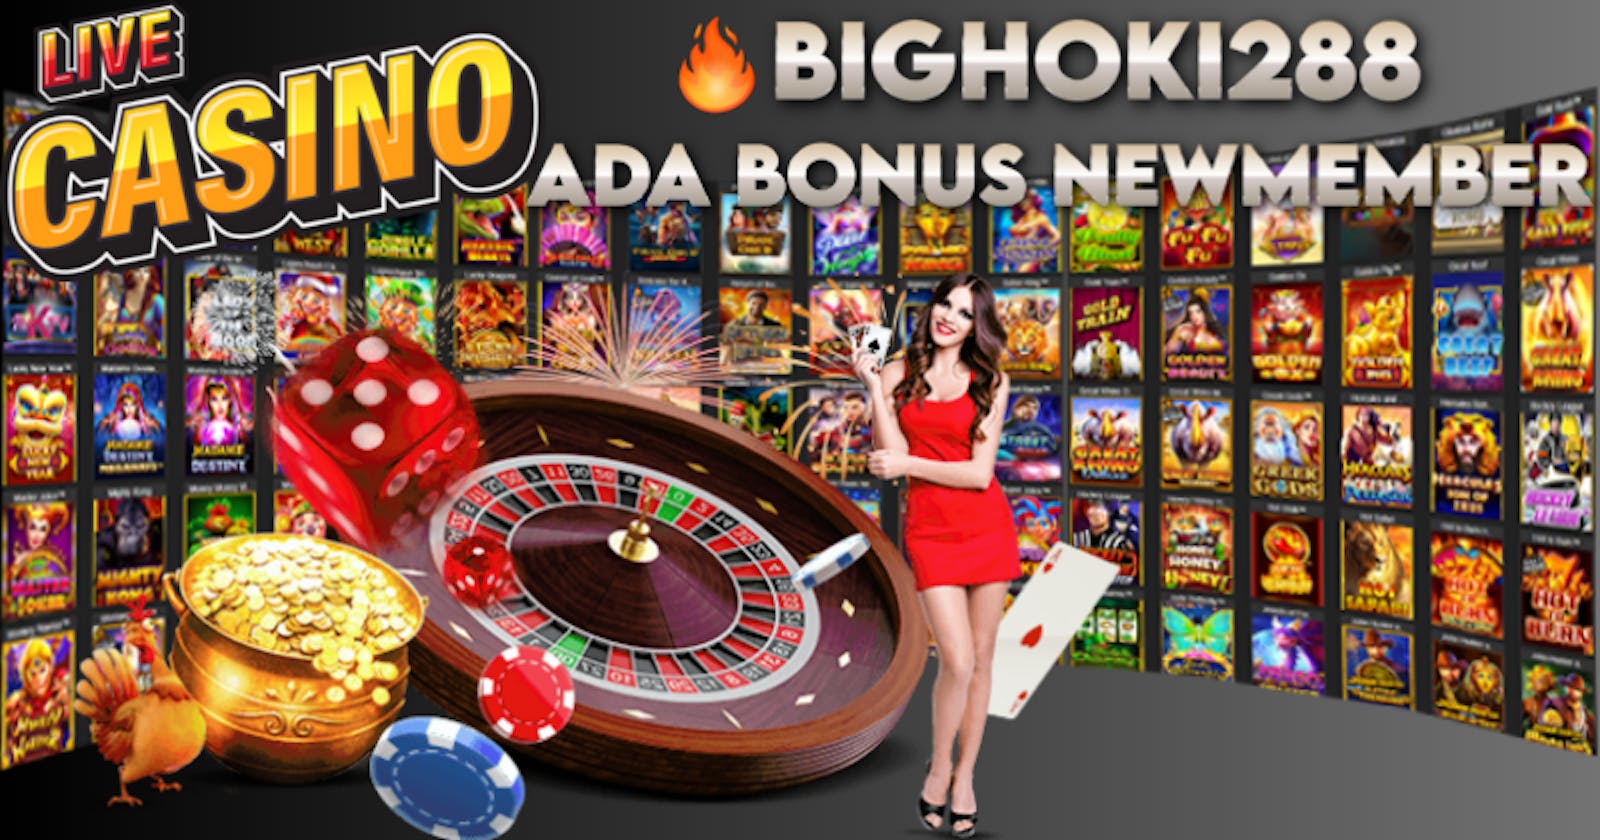 Situs Judi Live Casino Online Resmi Indonesia Bighoki288